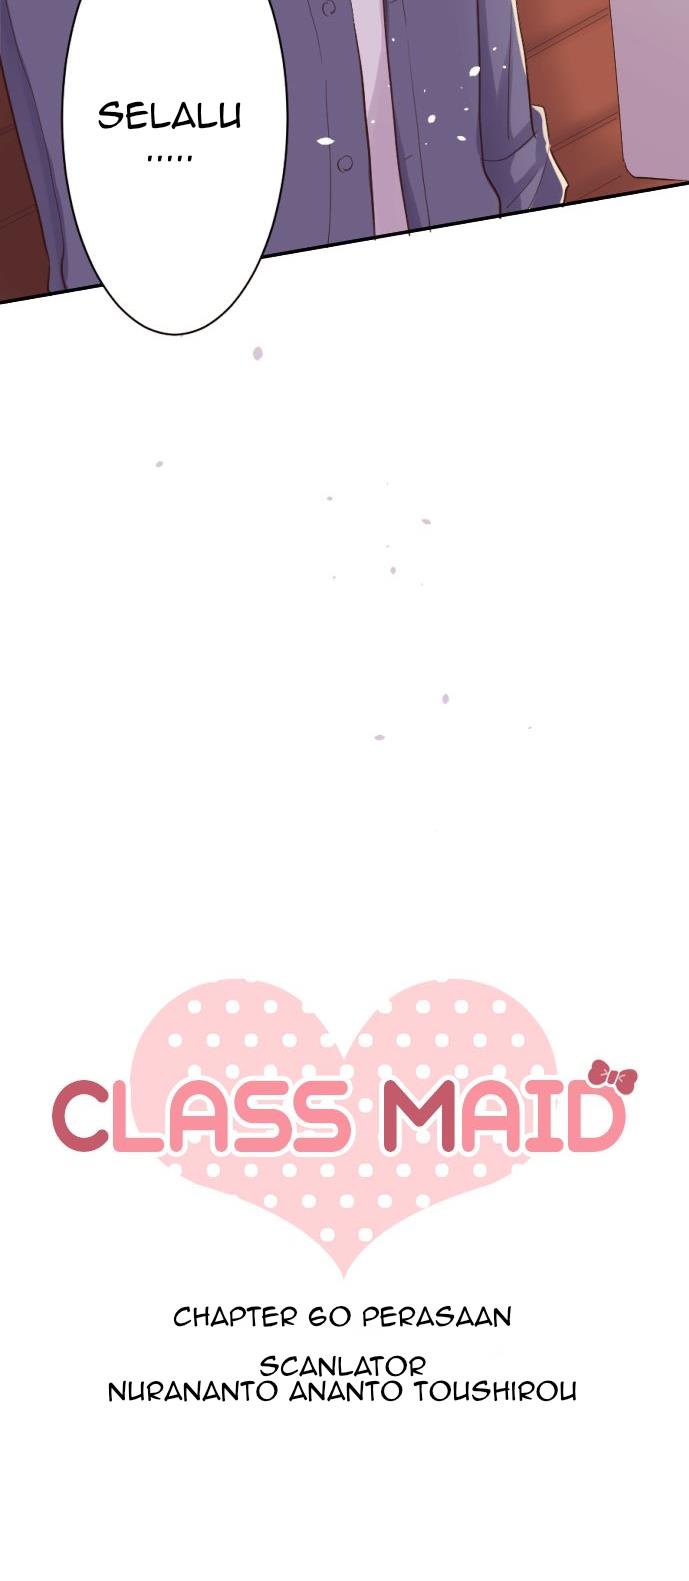 Class Maid (Shimamura) Chapter 60